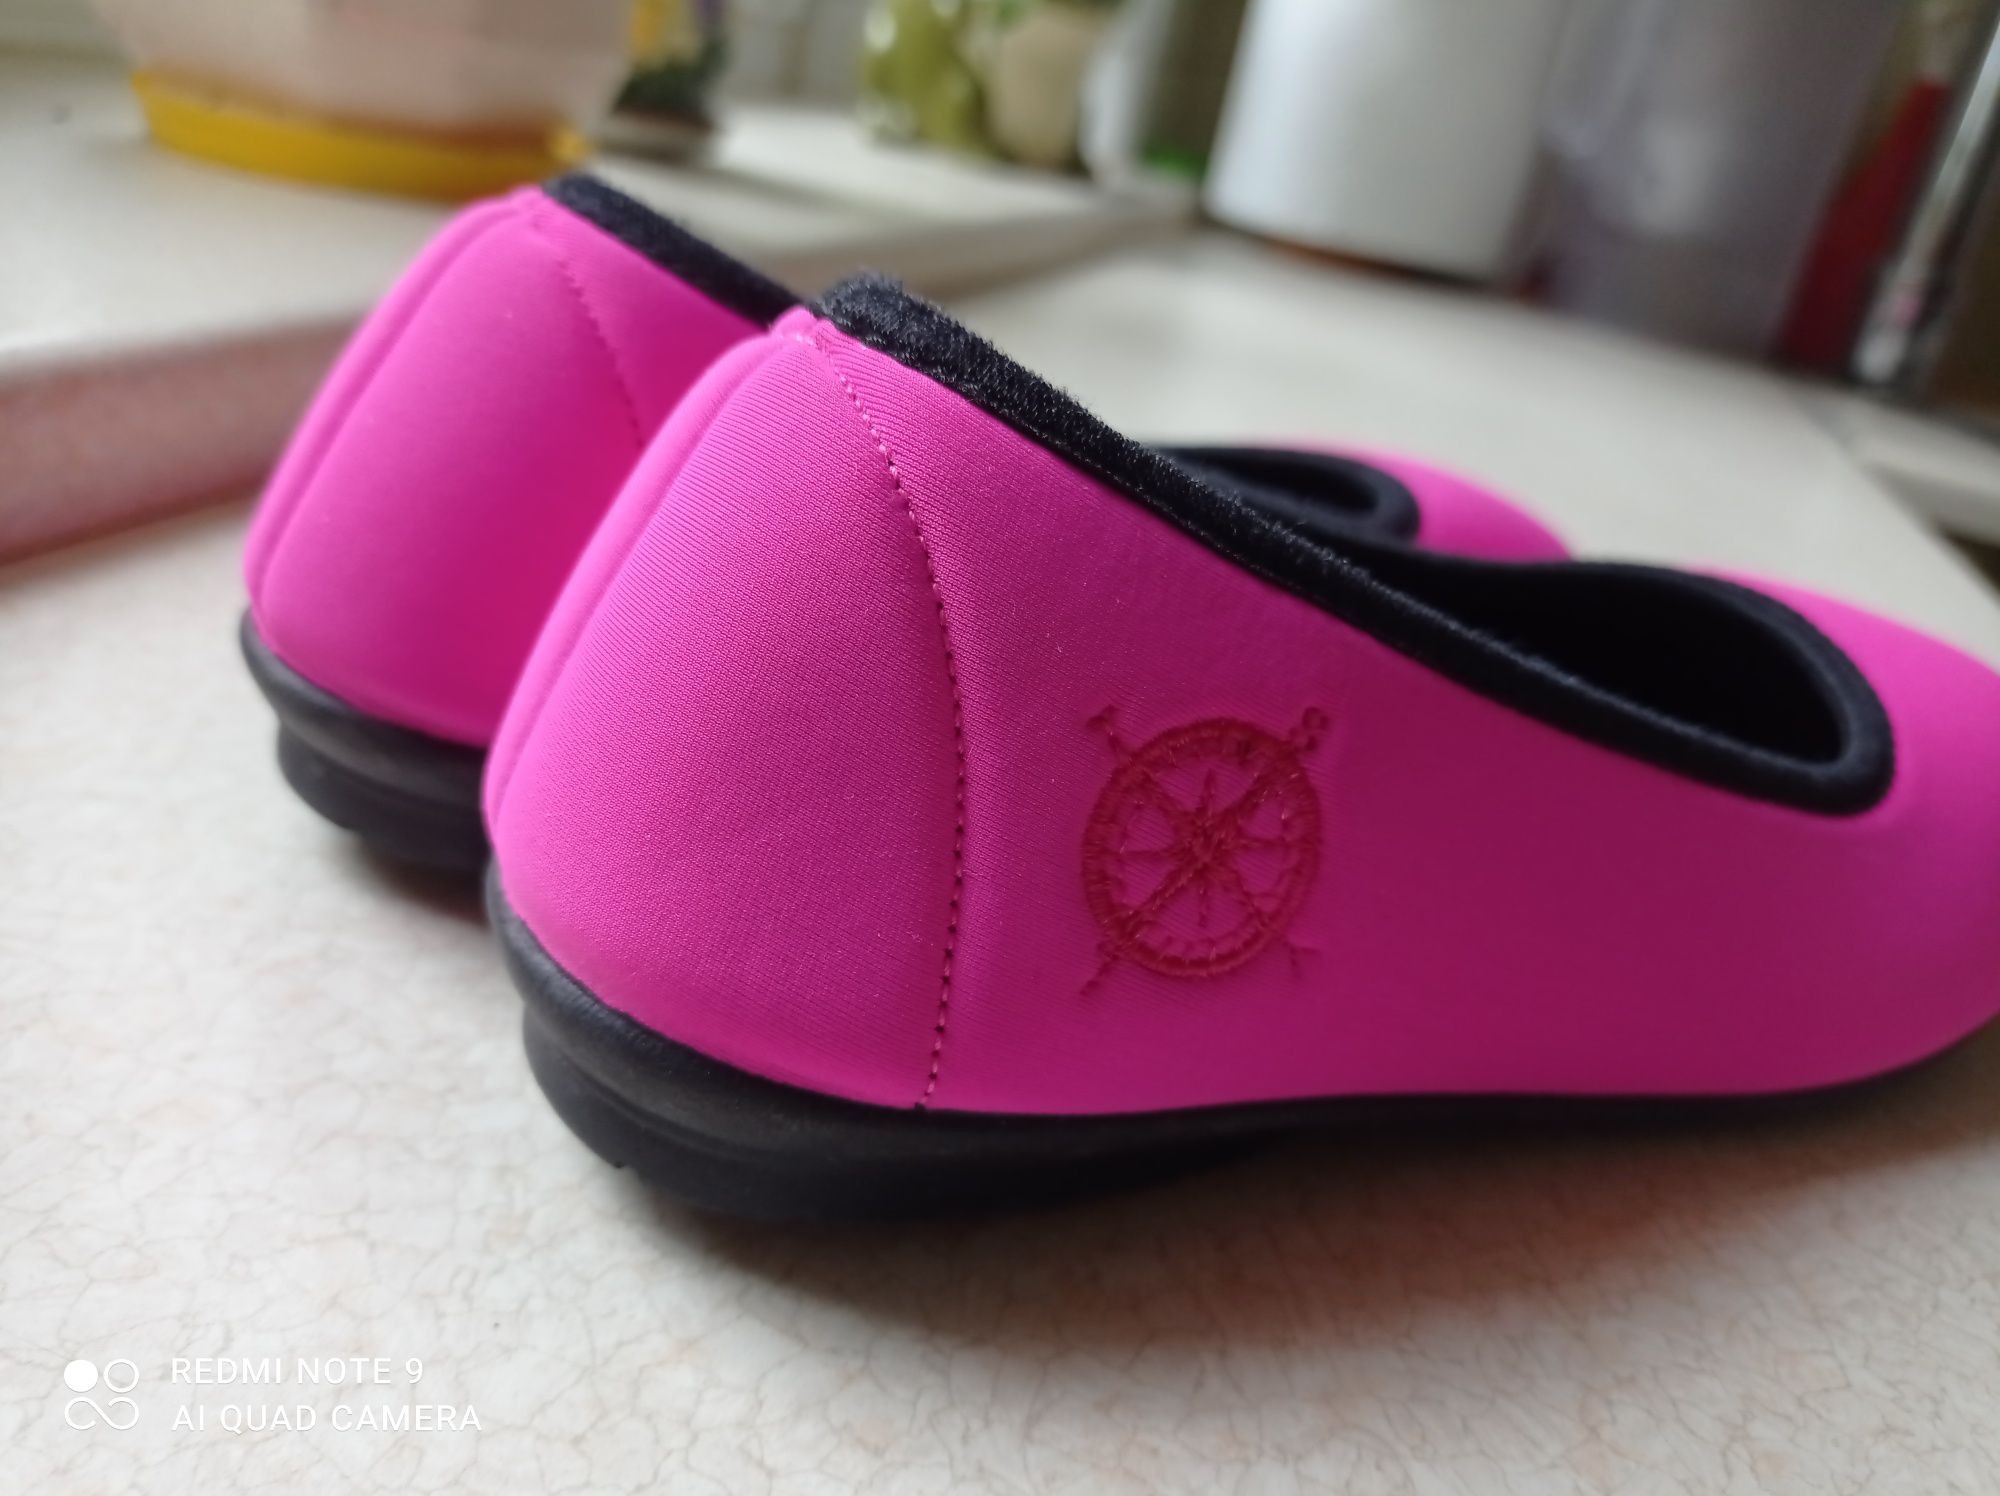 Nowe balerinki damskie z neoprenu Gosch Shoes, 77051-Bothild-504 Pink.